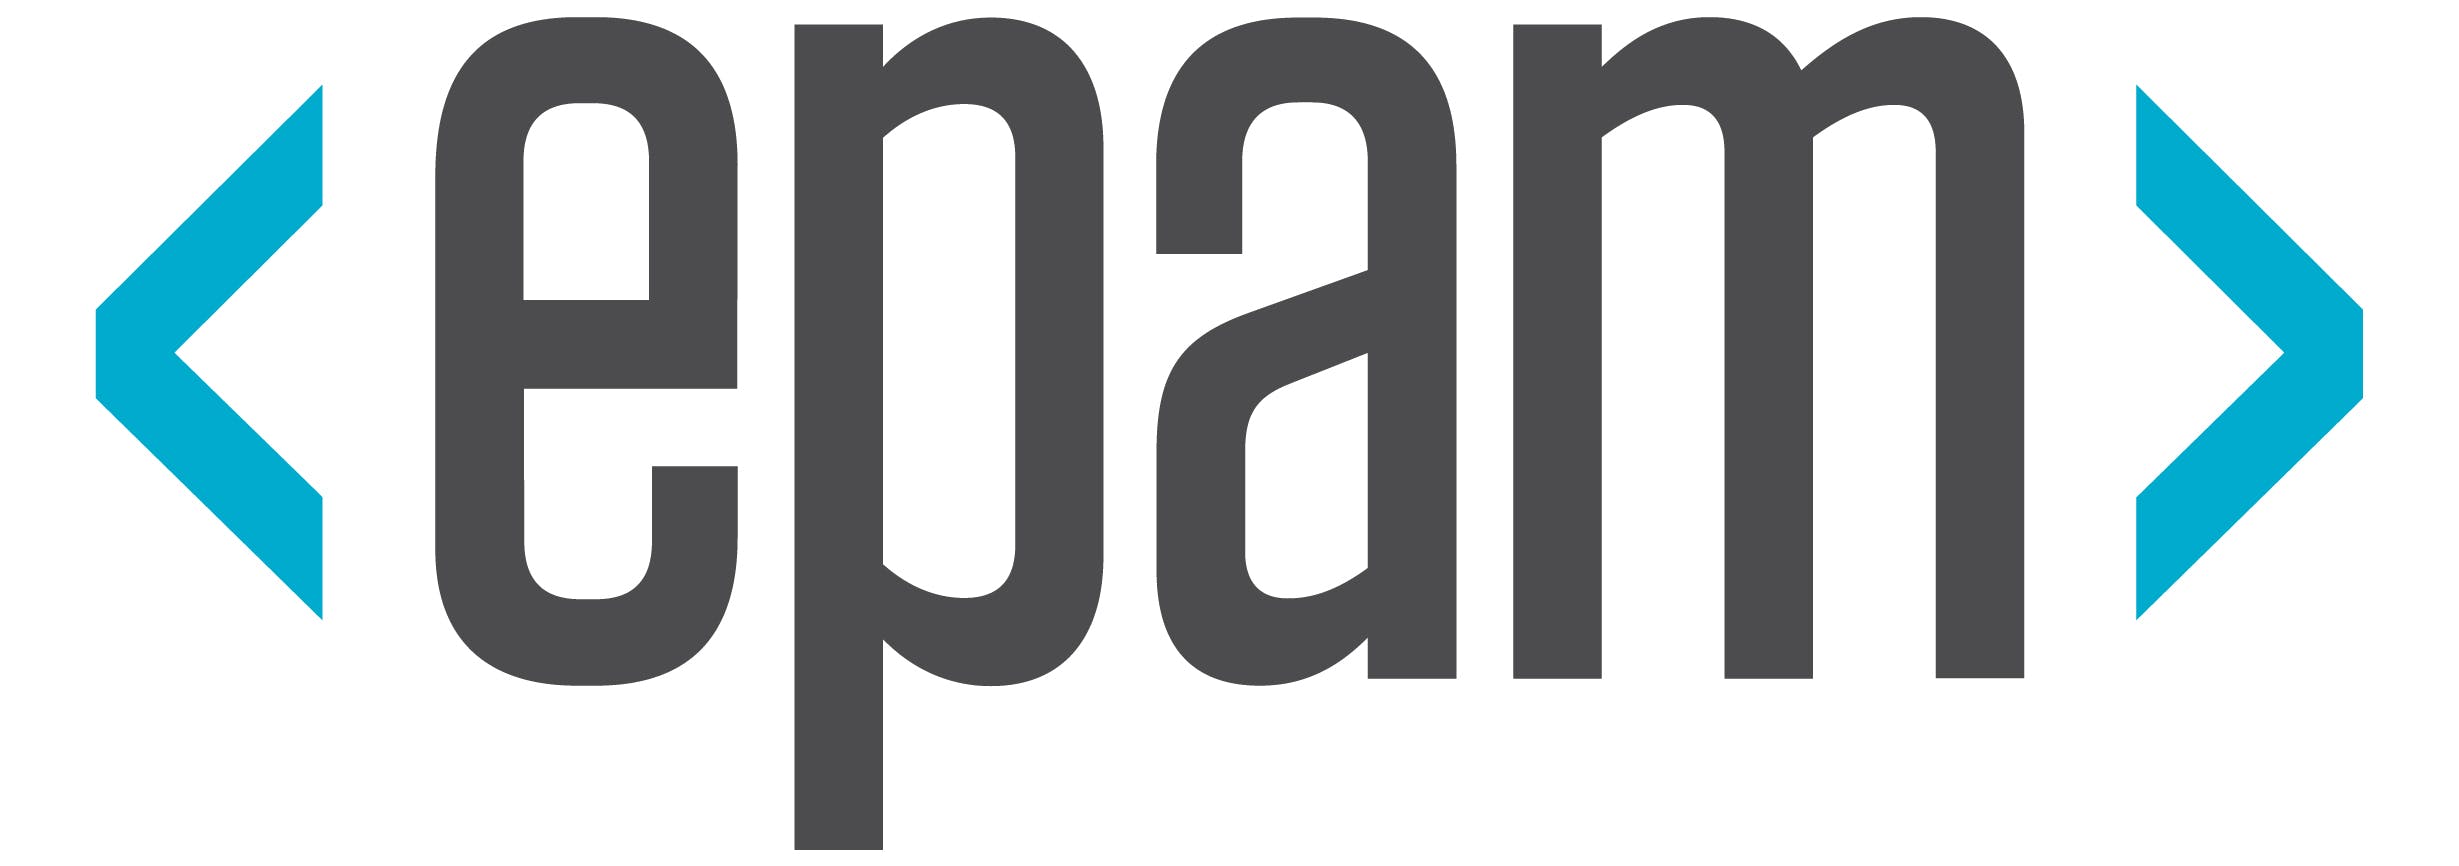 Epam Systems Ltd